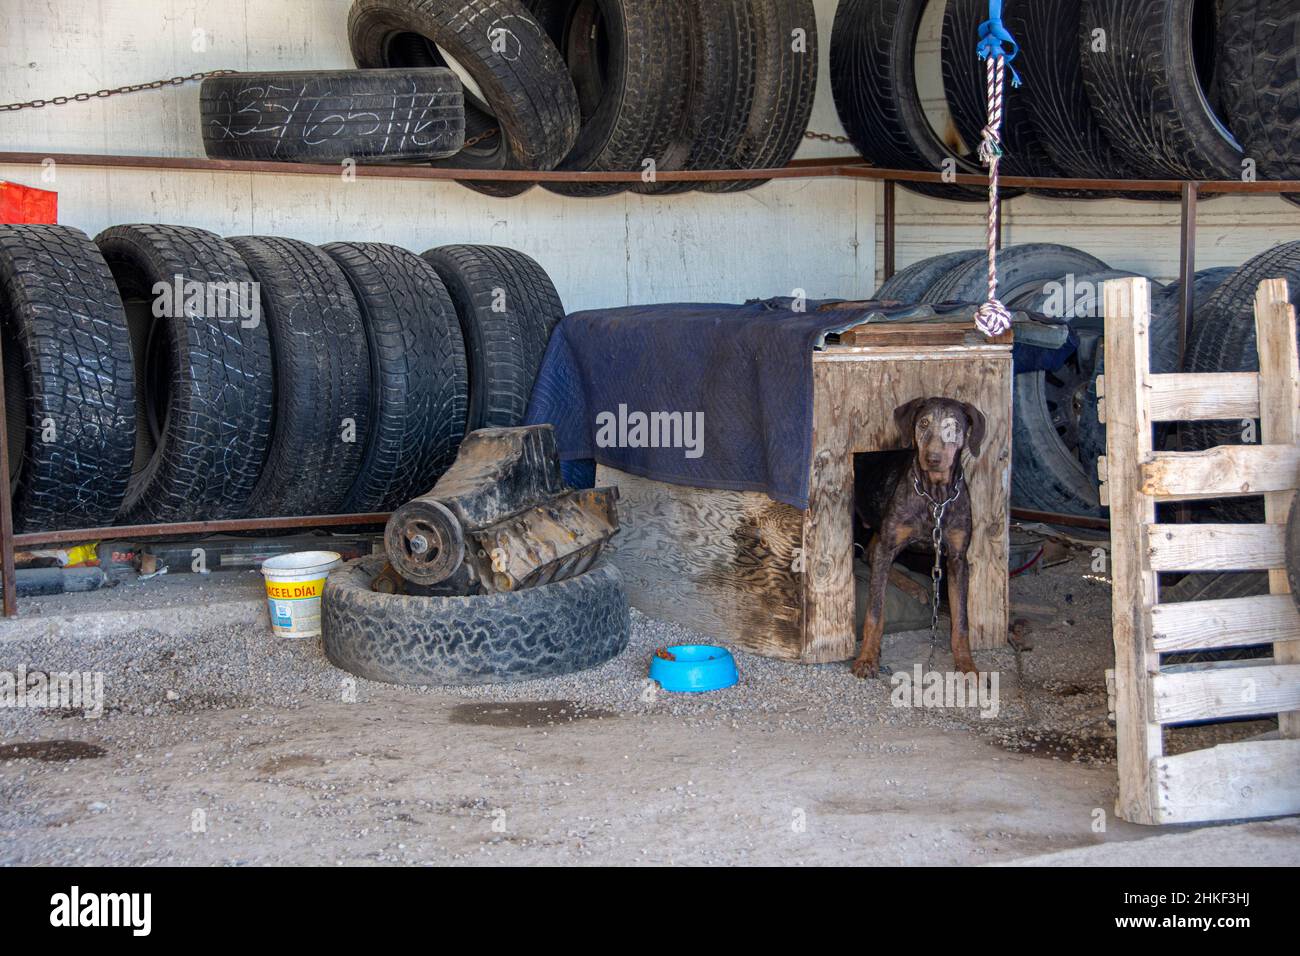 A rangy dog guarding the tires at a tire store; Sonoyta, Baja California, Mexico. Stock Photo